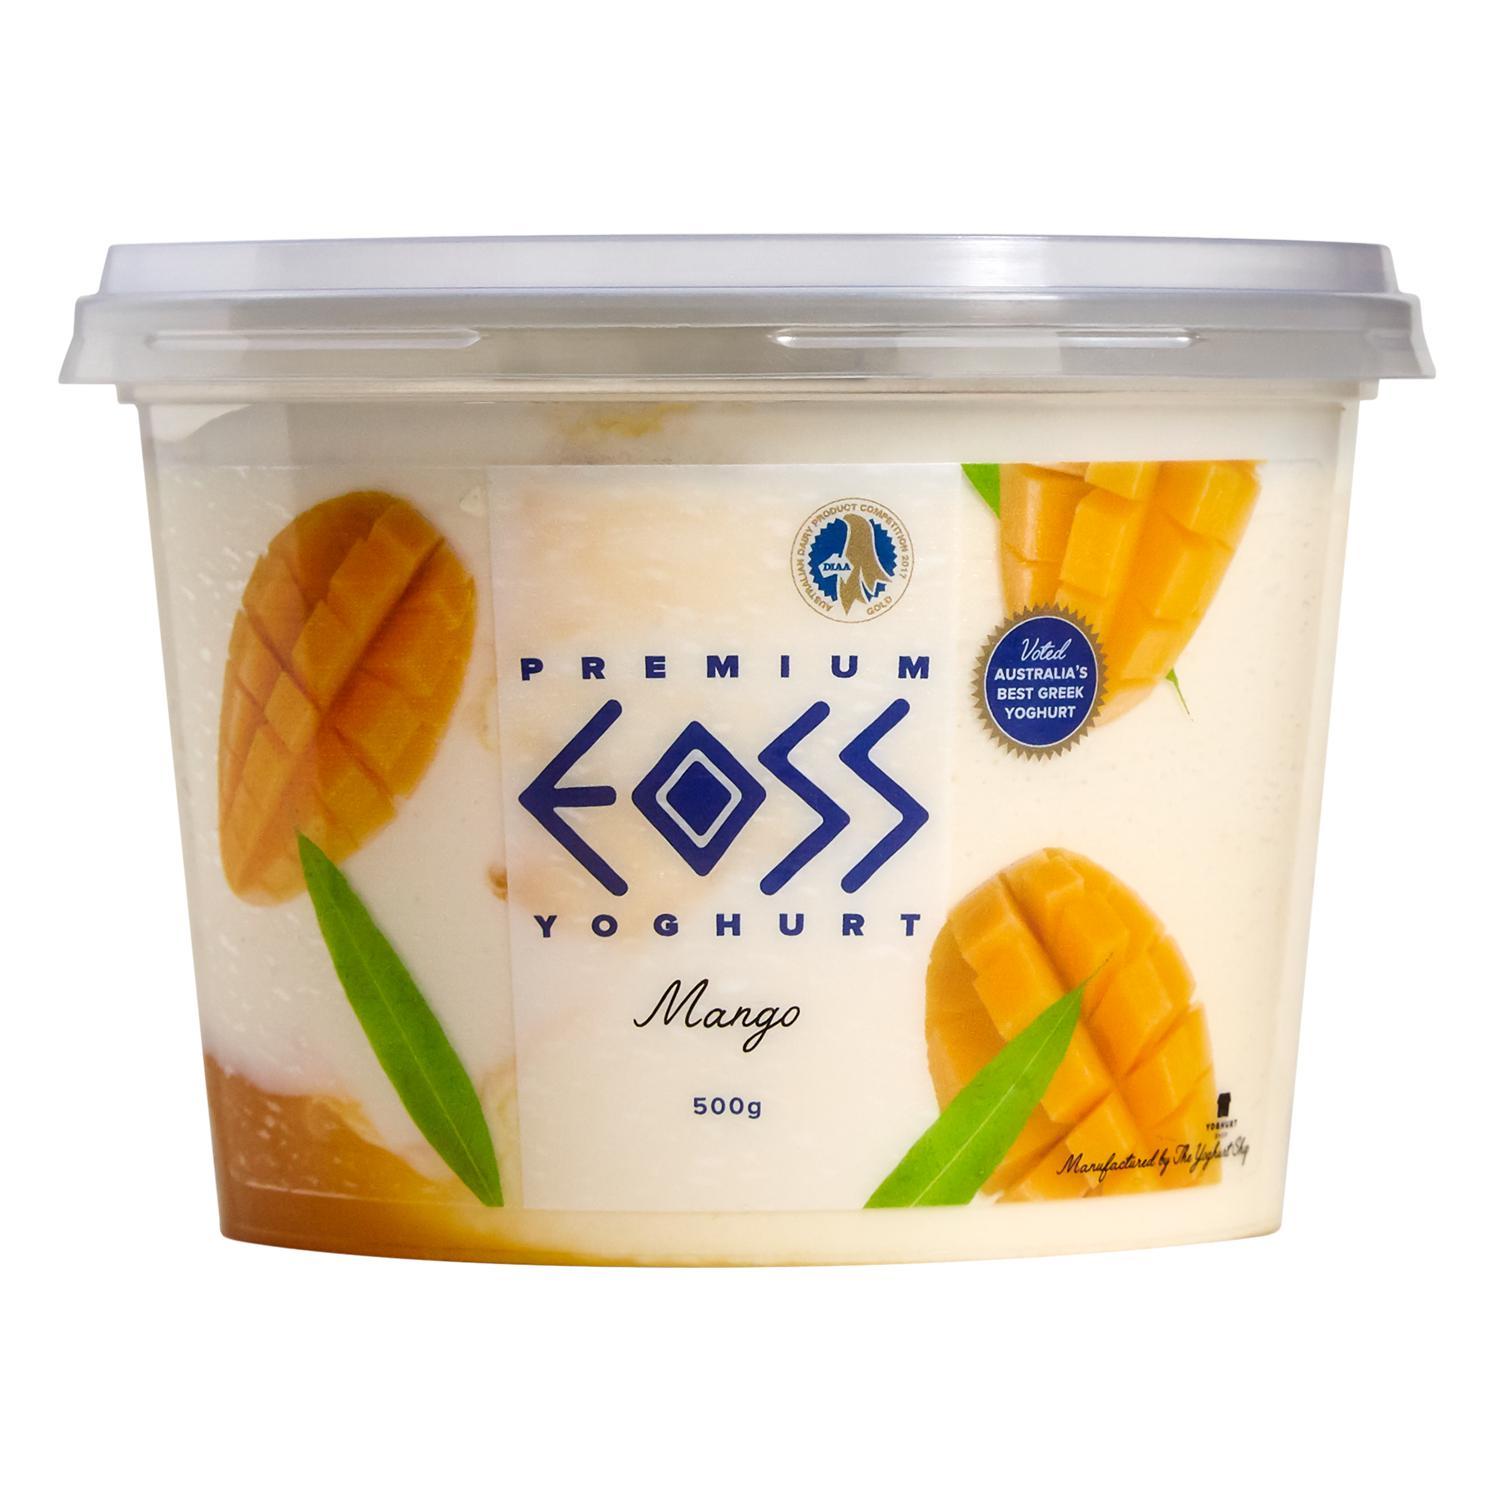 EOSS Yoghurt Mango Tub 500g